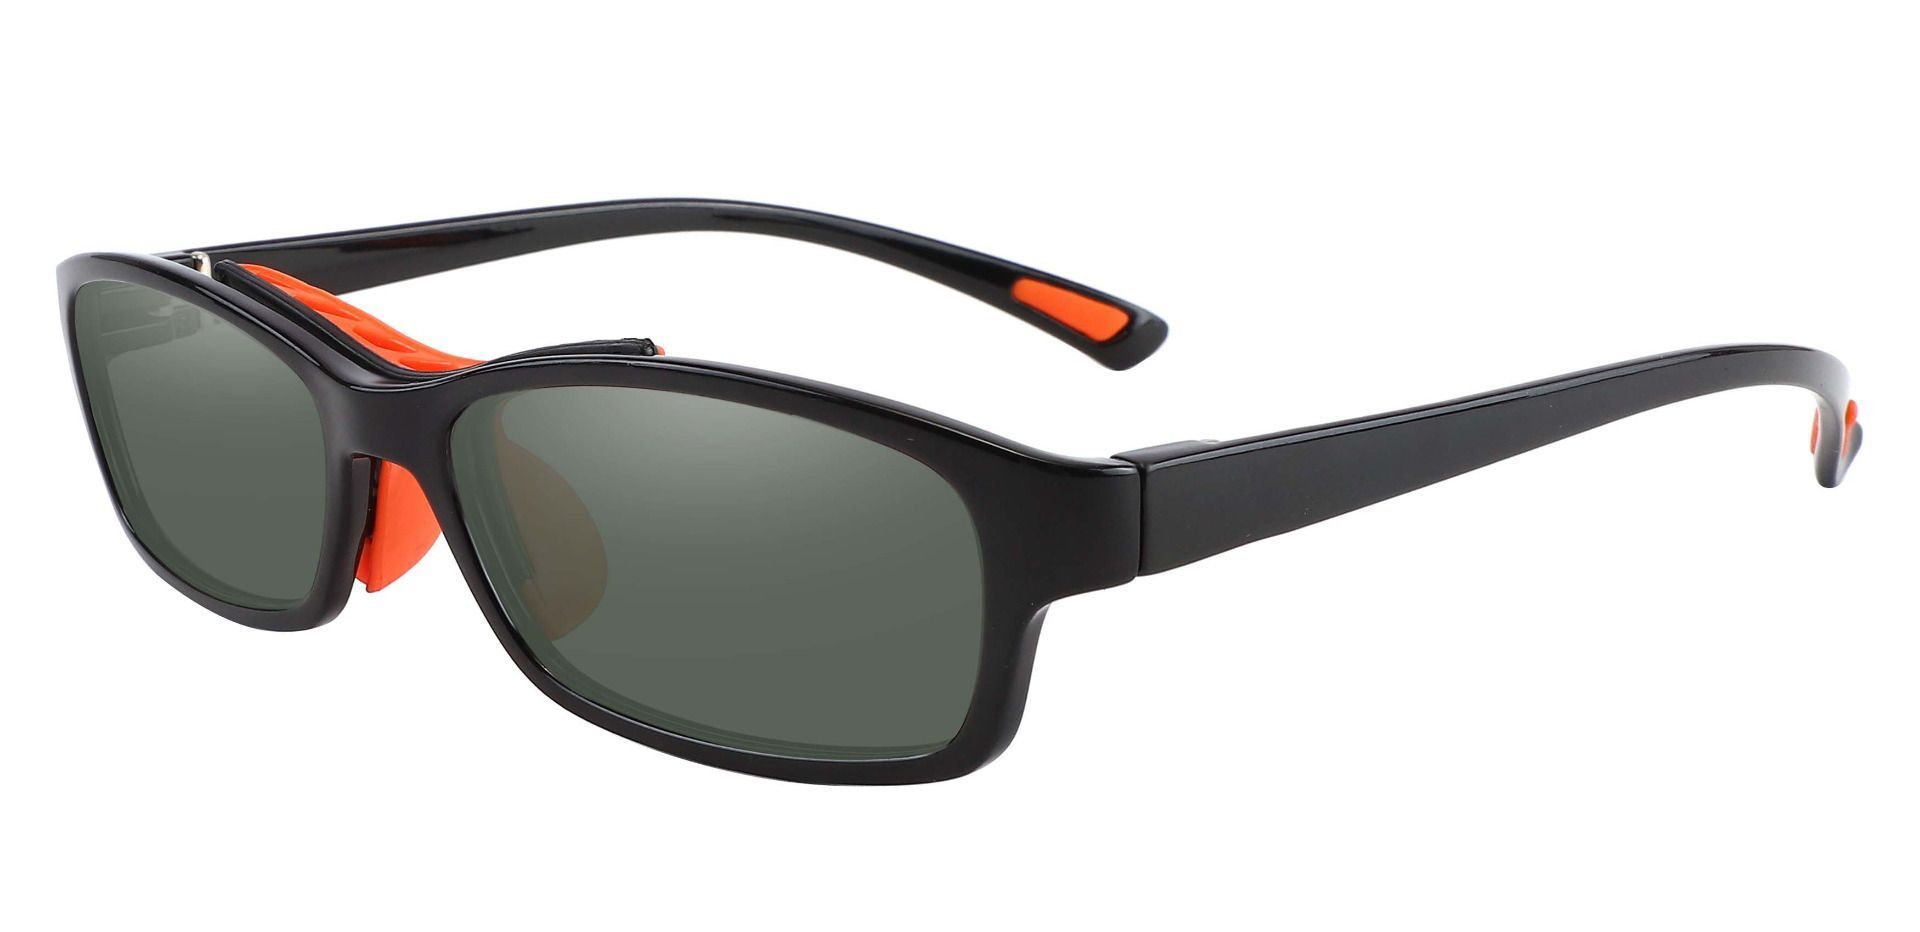 Glynn Rectangle Non-Rx Sunglasses - Black Frame With Green Lenses